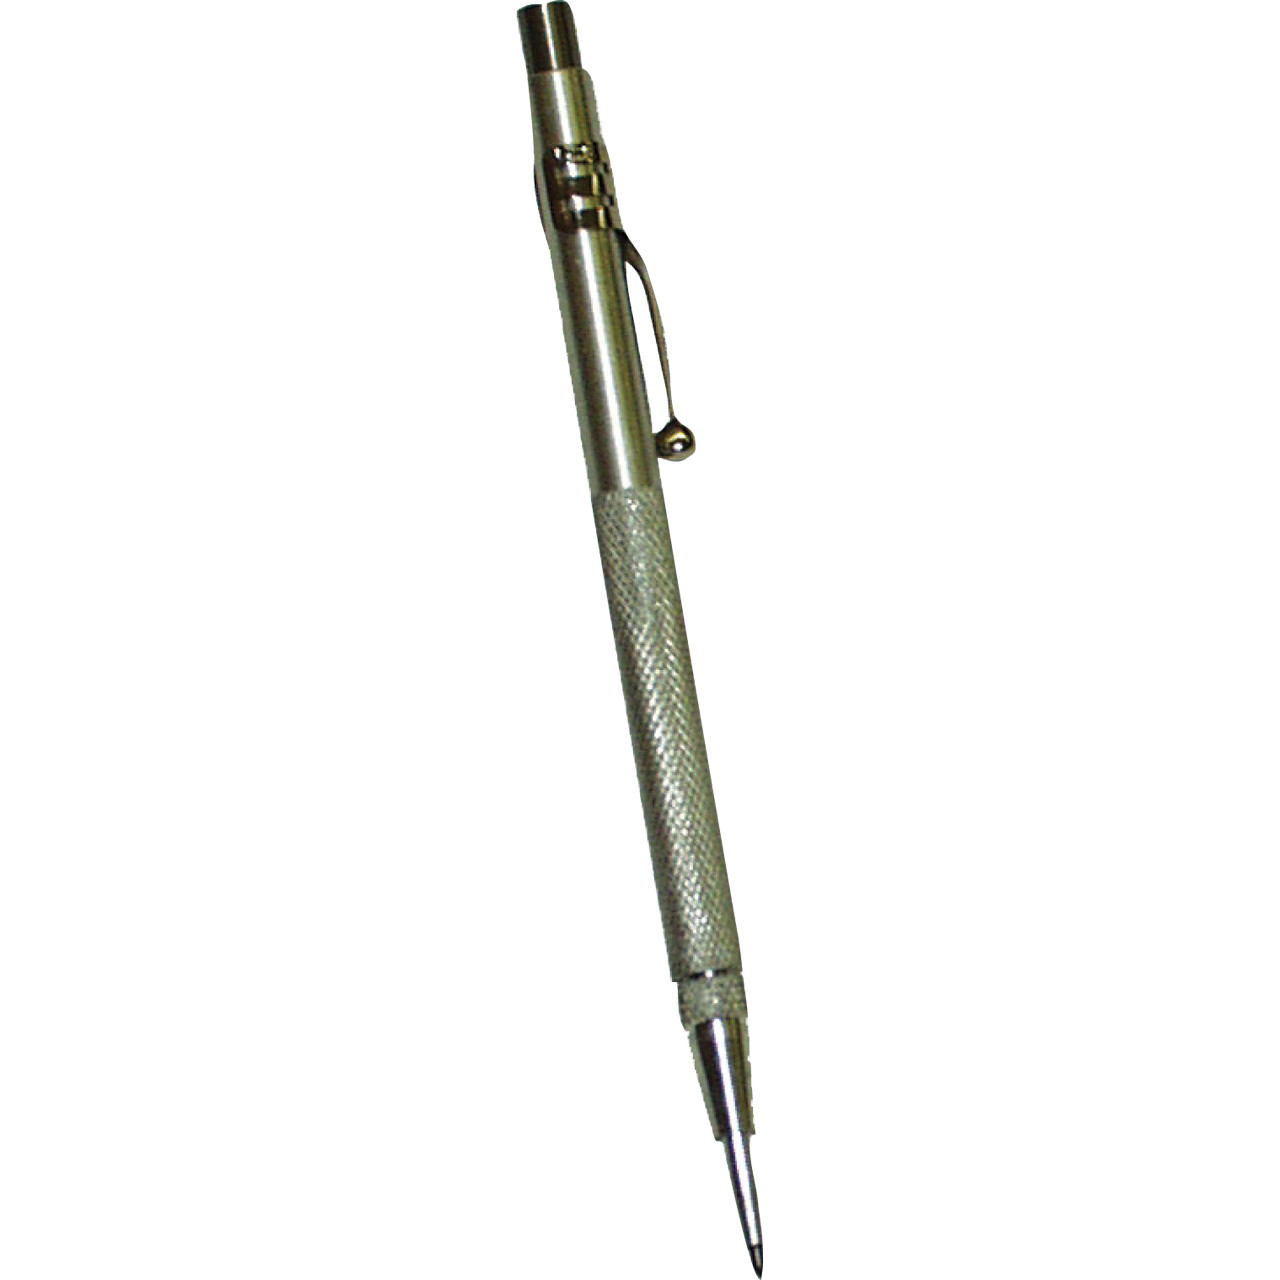 Metal Scribe Tool, Set Of 2 Pieces, Tungsten Carbide Tip Scriber